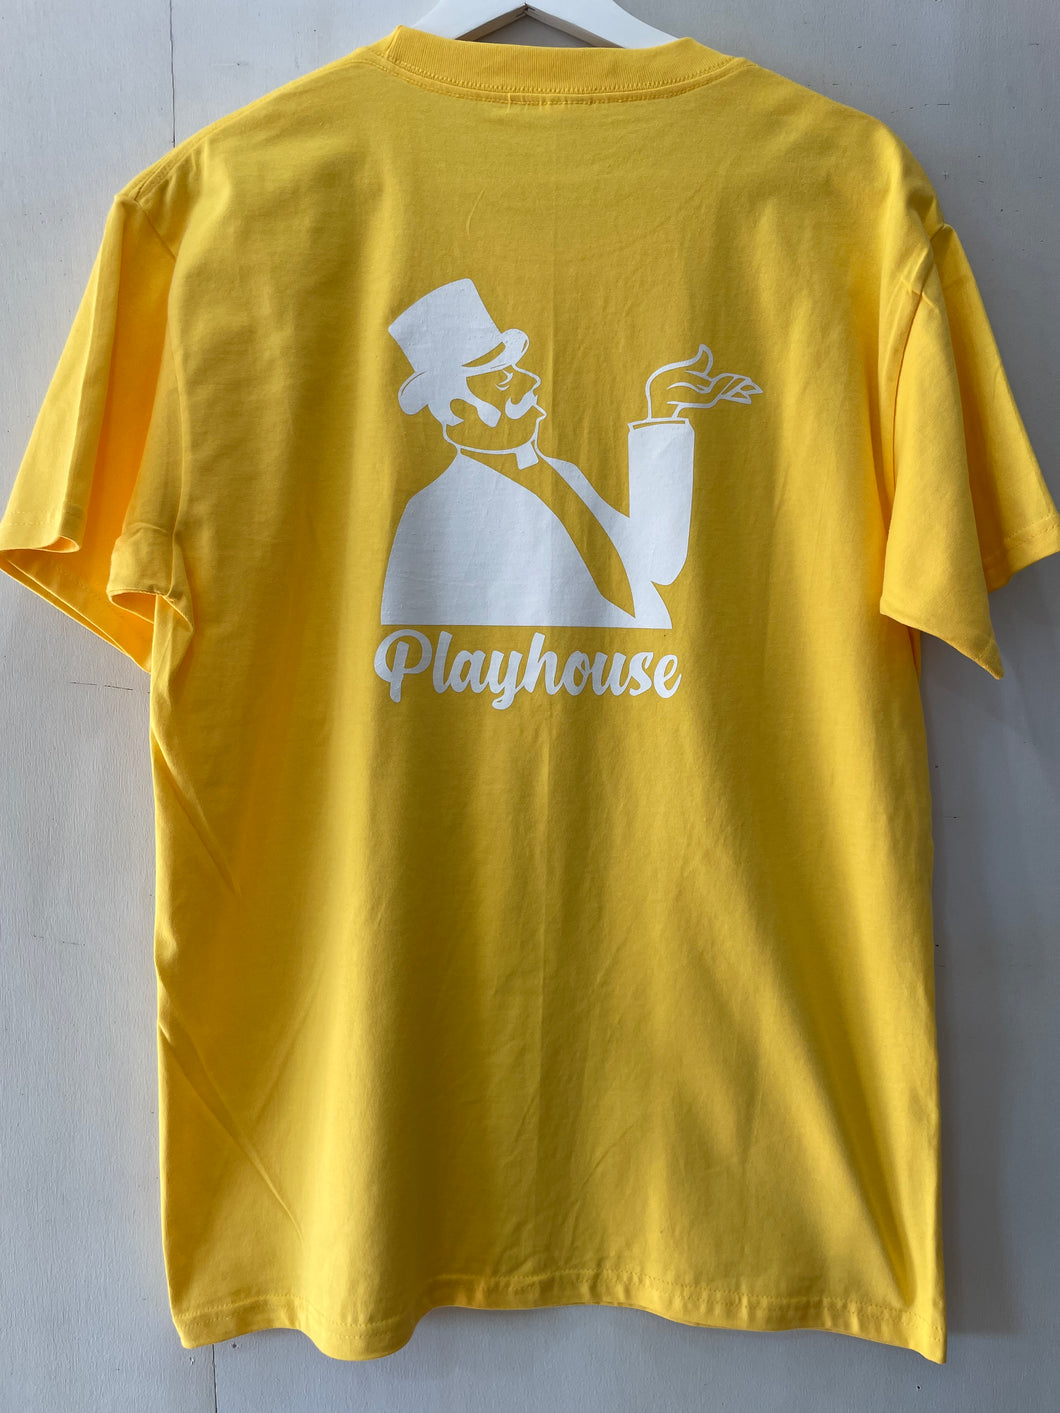 Playhouse Shop Tee